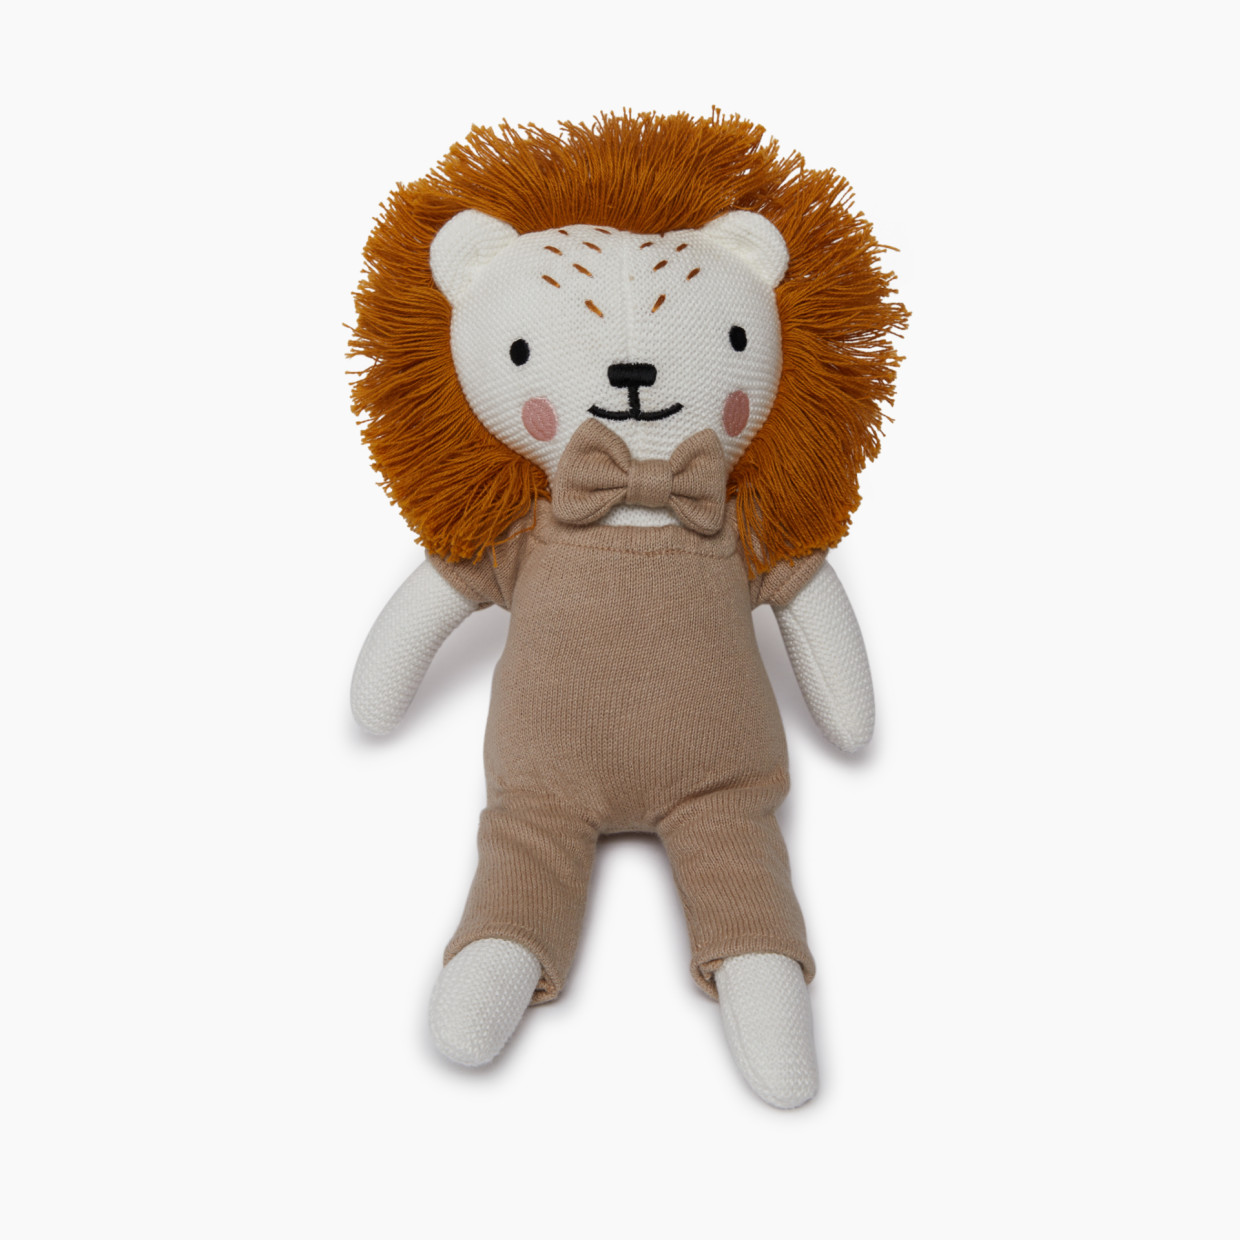 Loomsake Stuffed Animal - Lion.